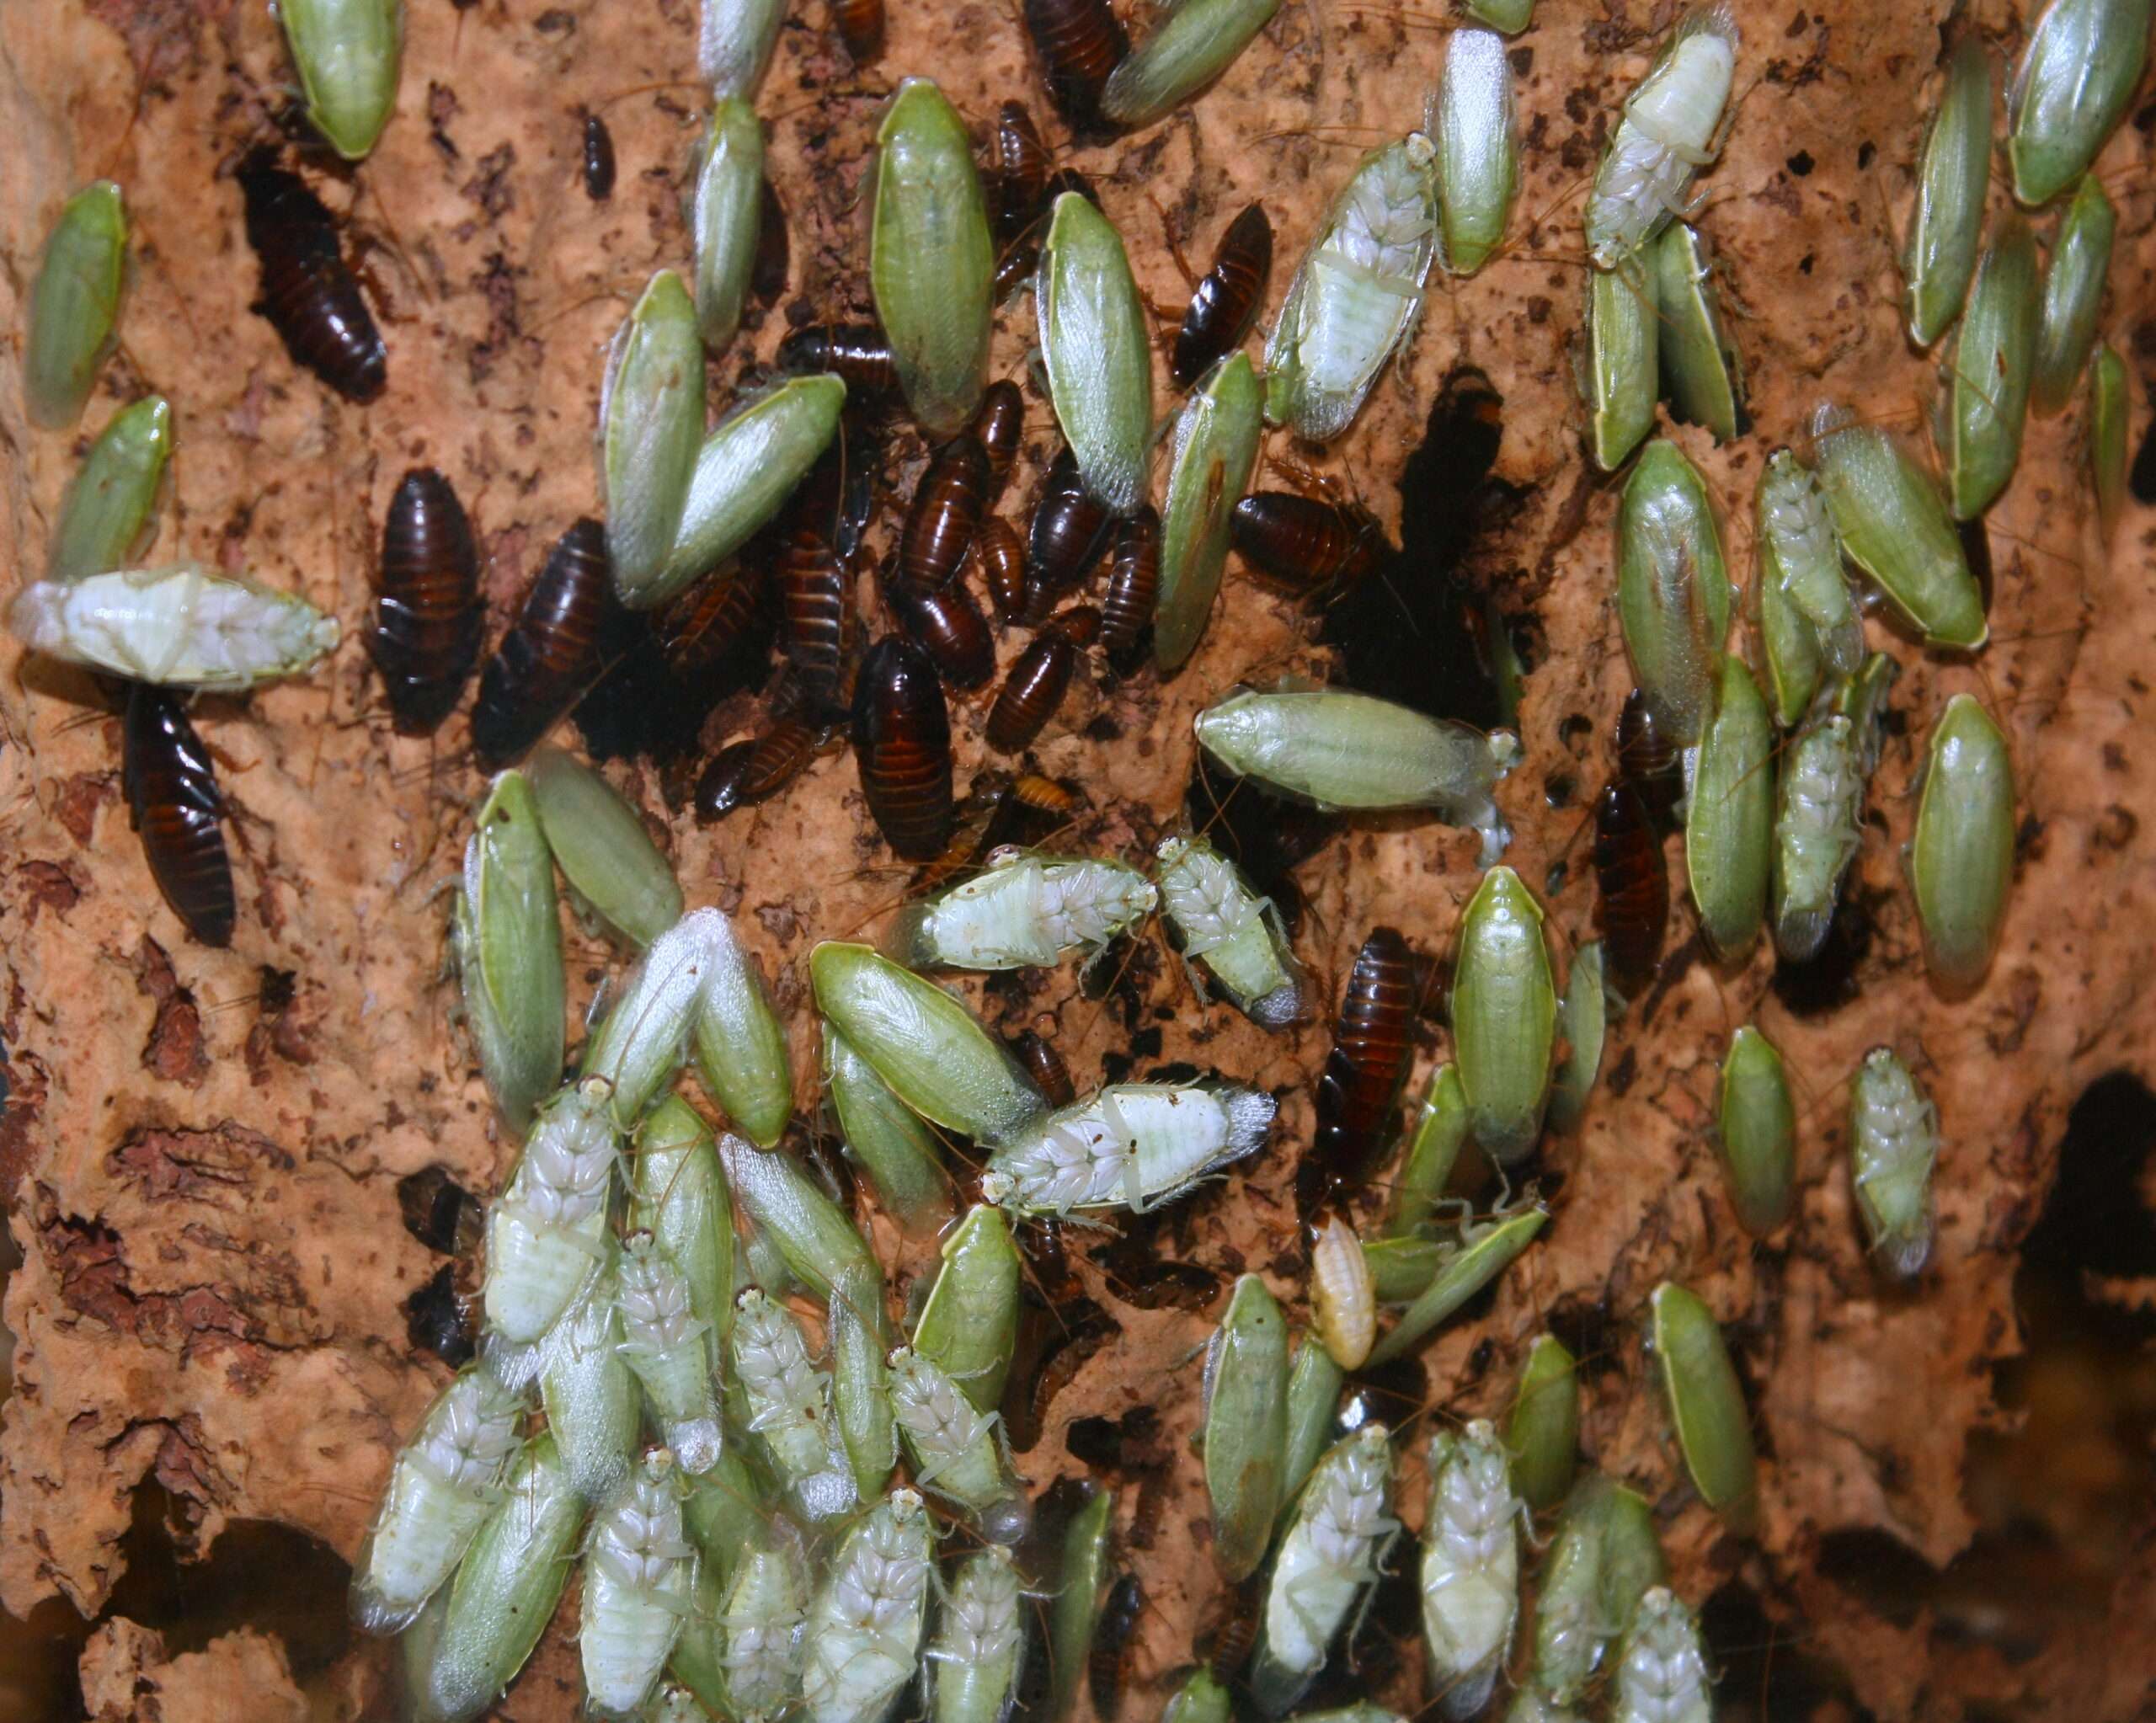 Green Banana Cockroach (Panchlora sp.)